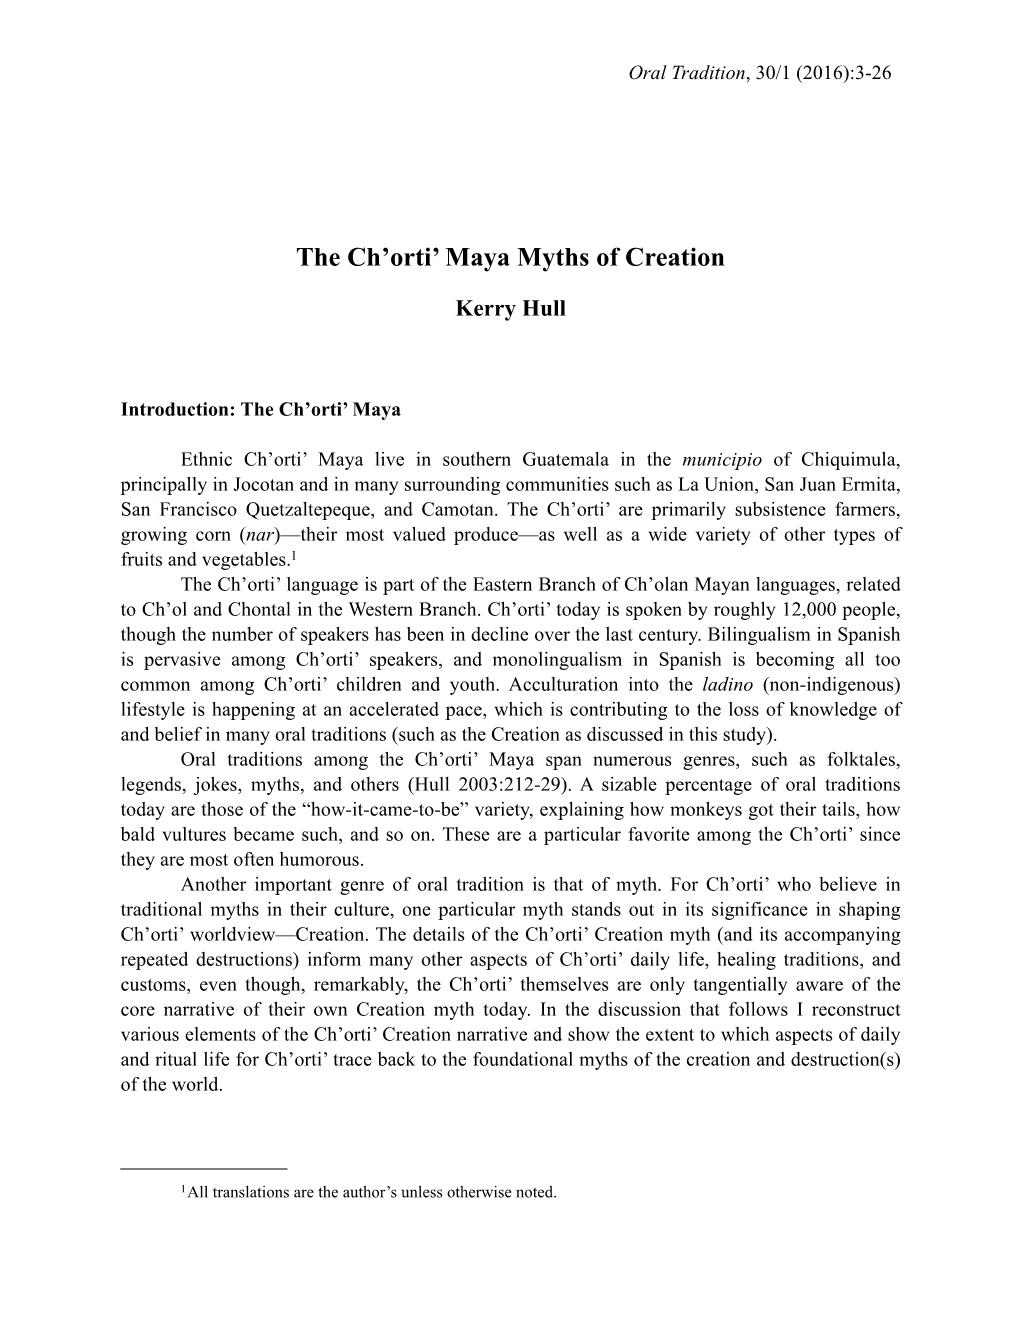 The Ch'orti' Maya Myths of Creation